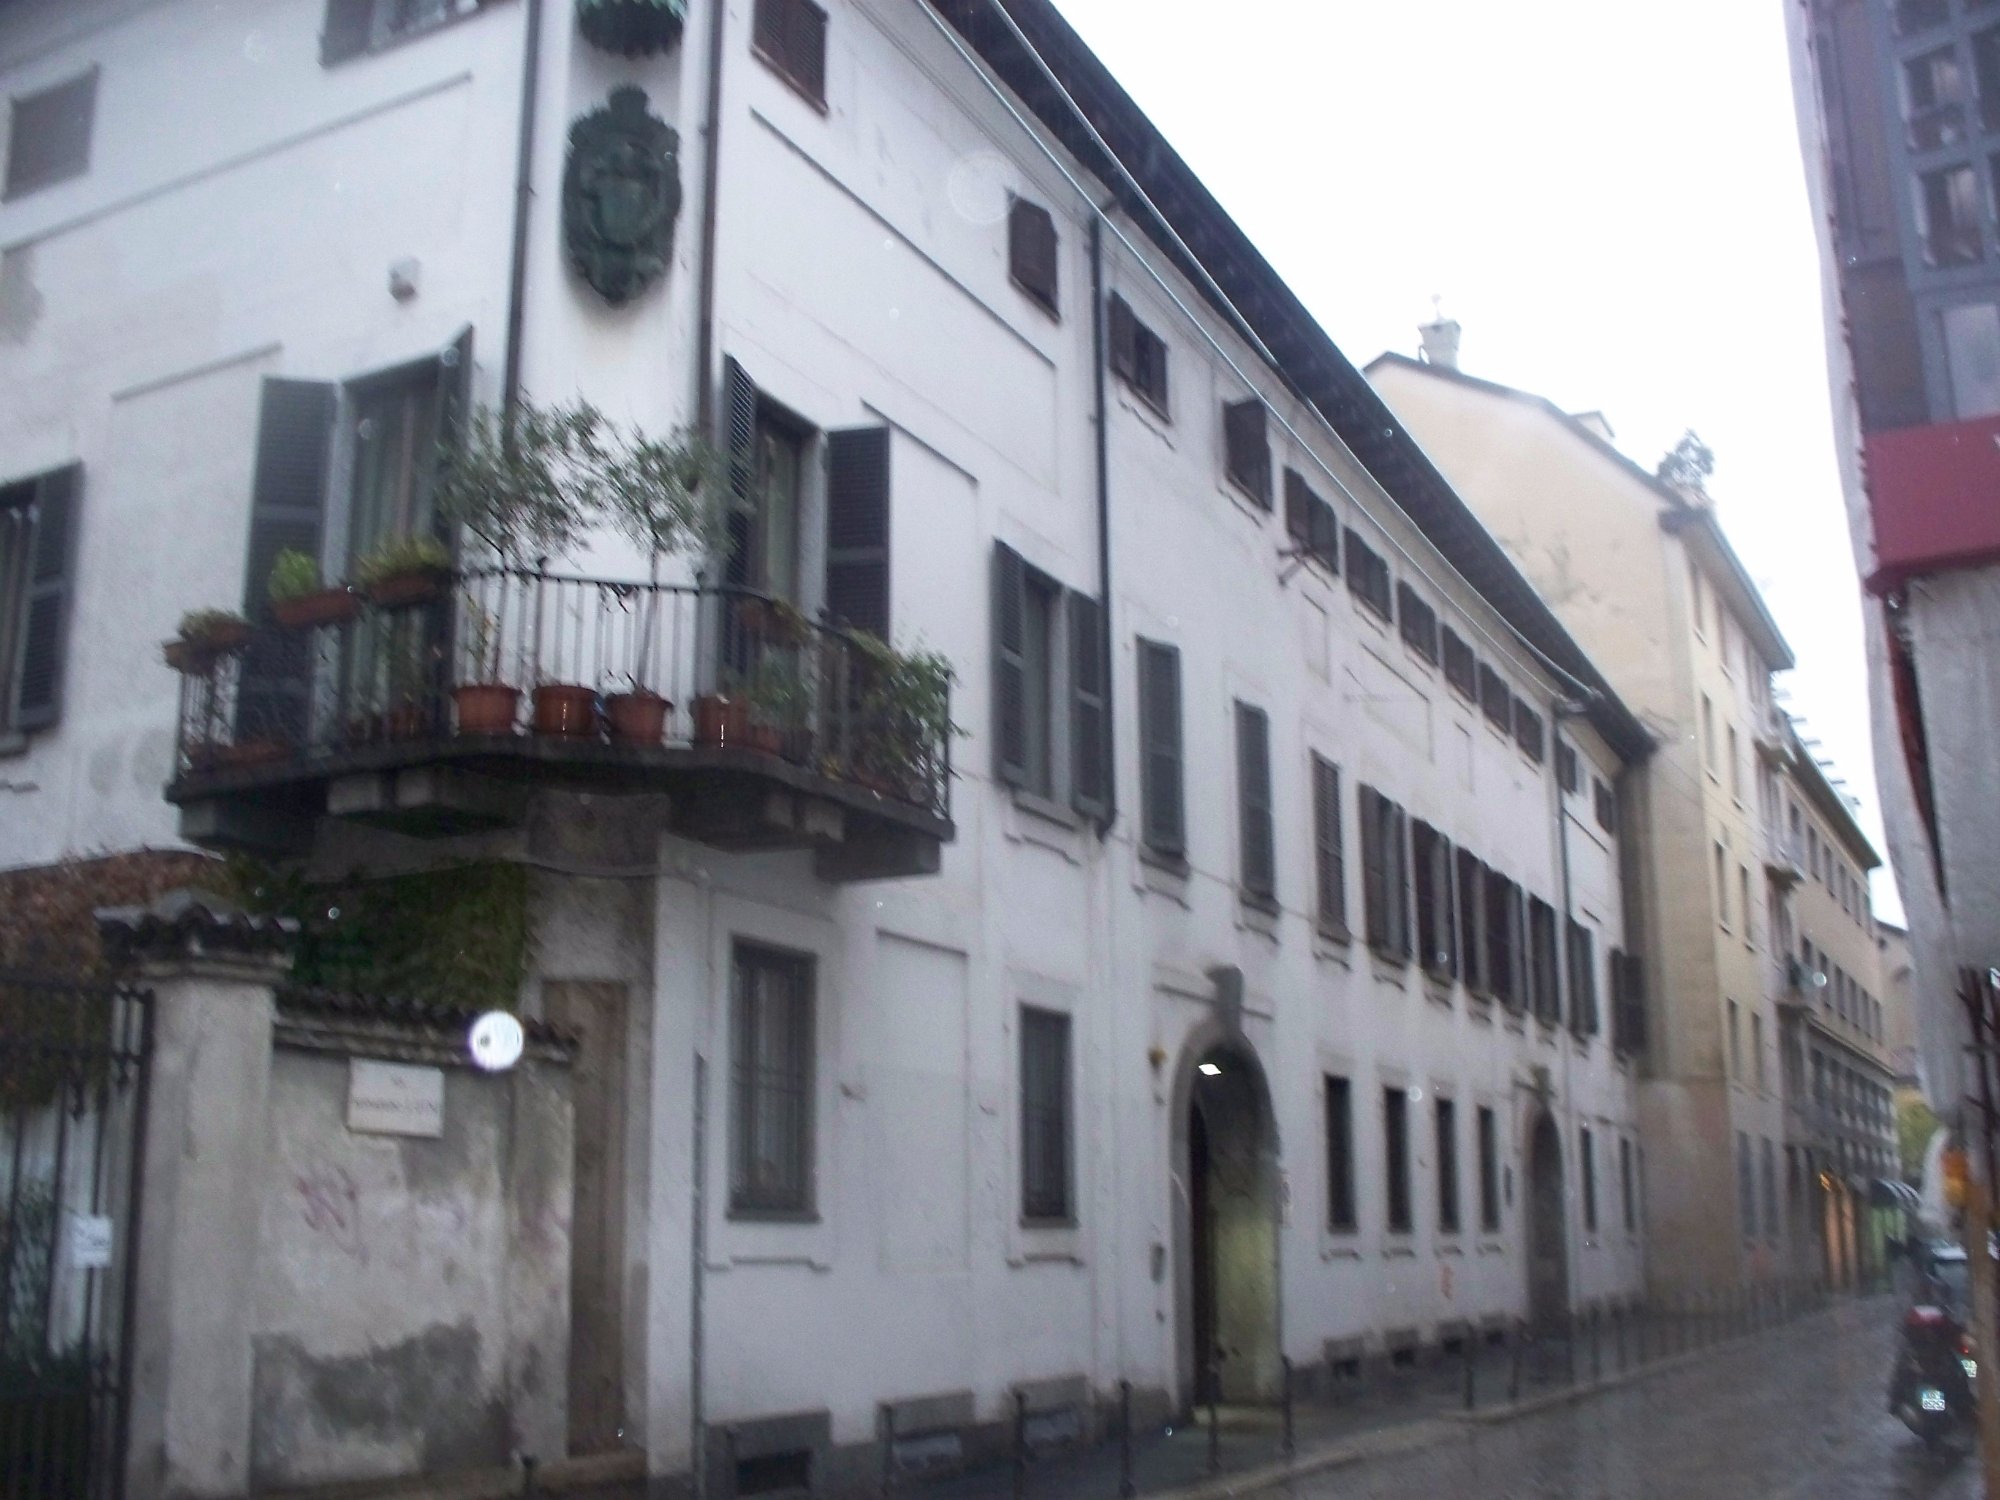 Palazzo De Capitani d’Arzago